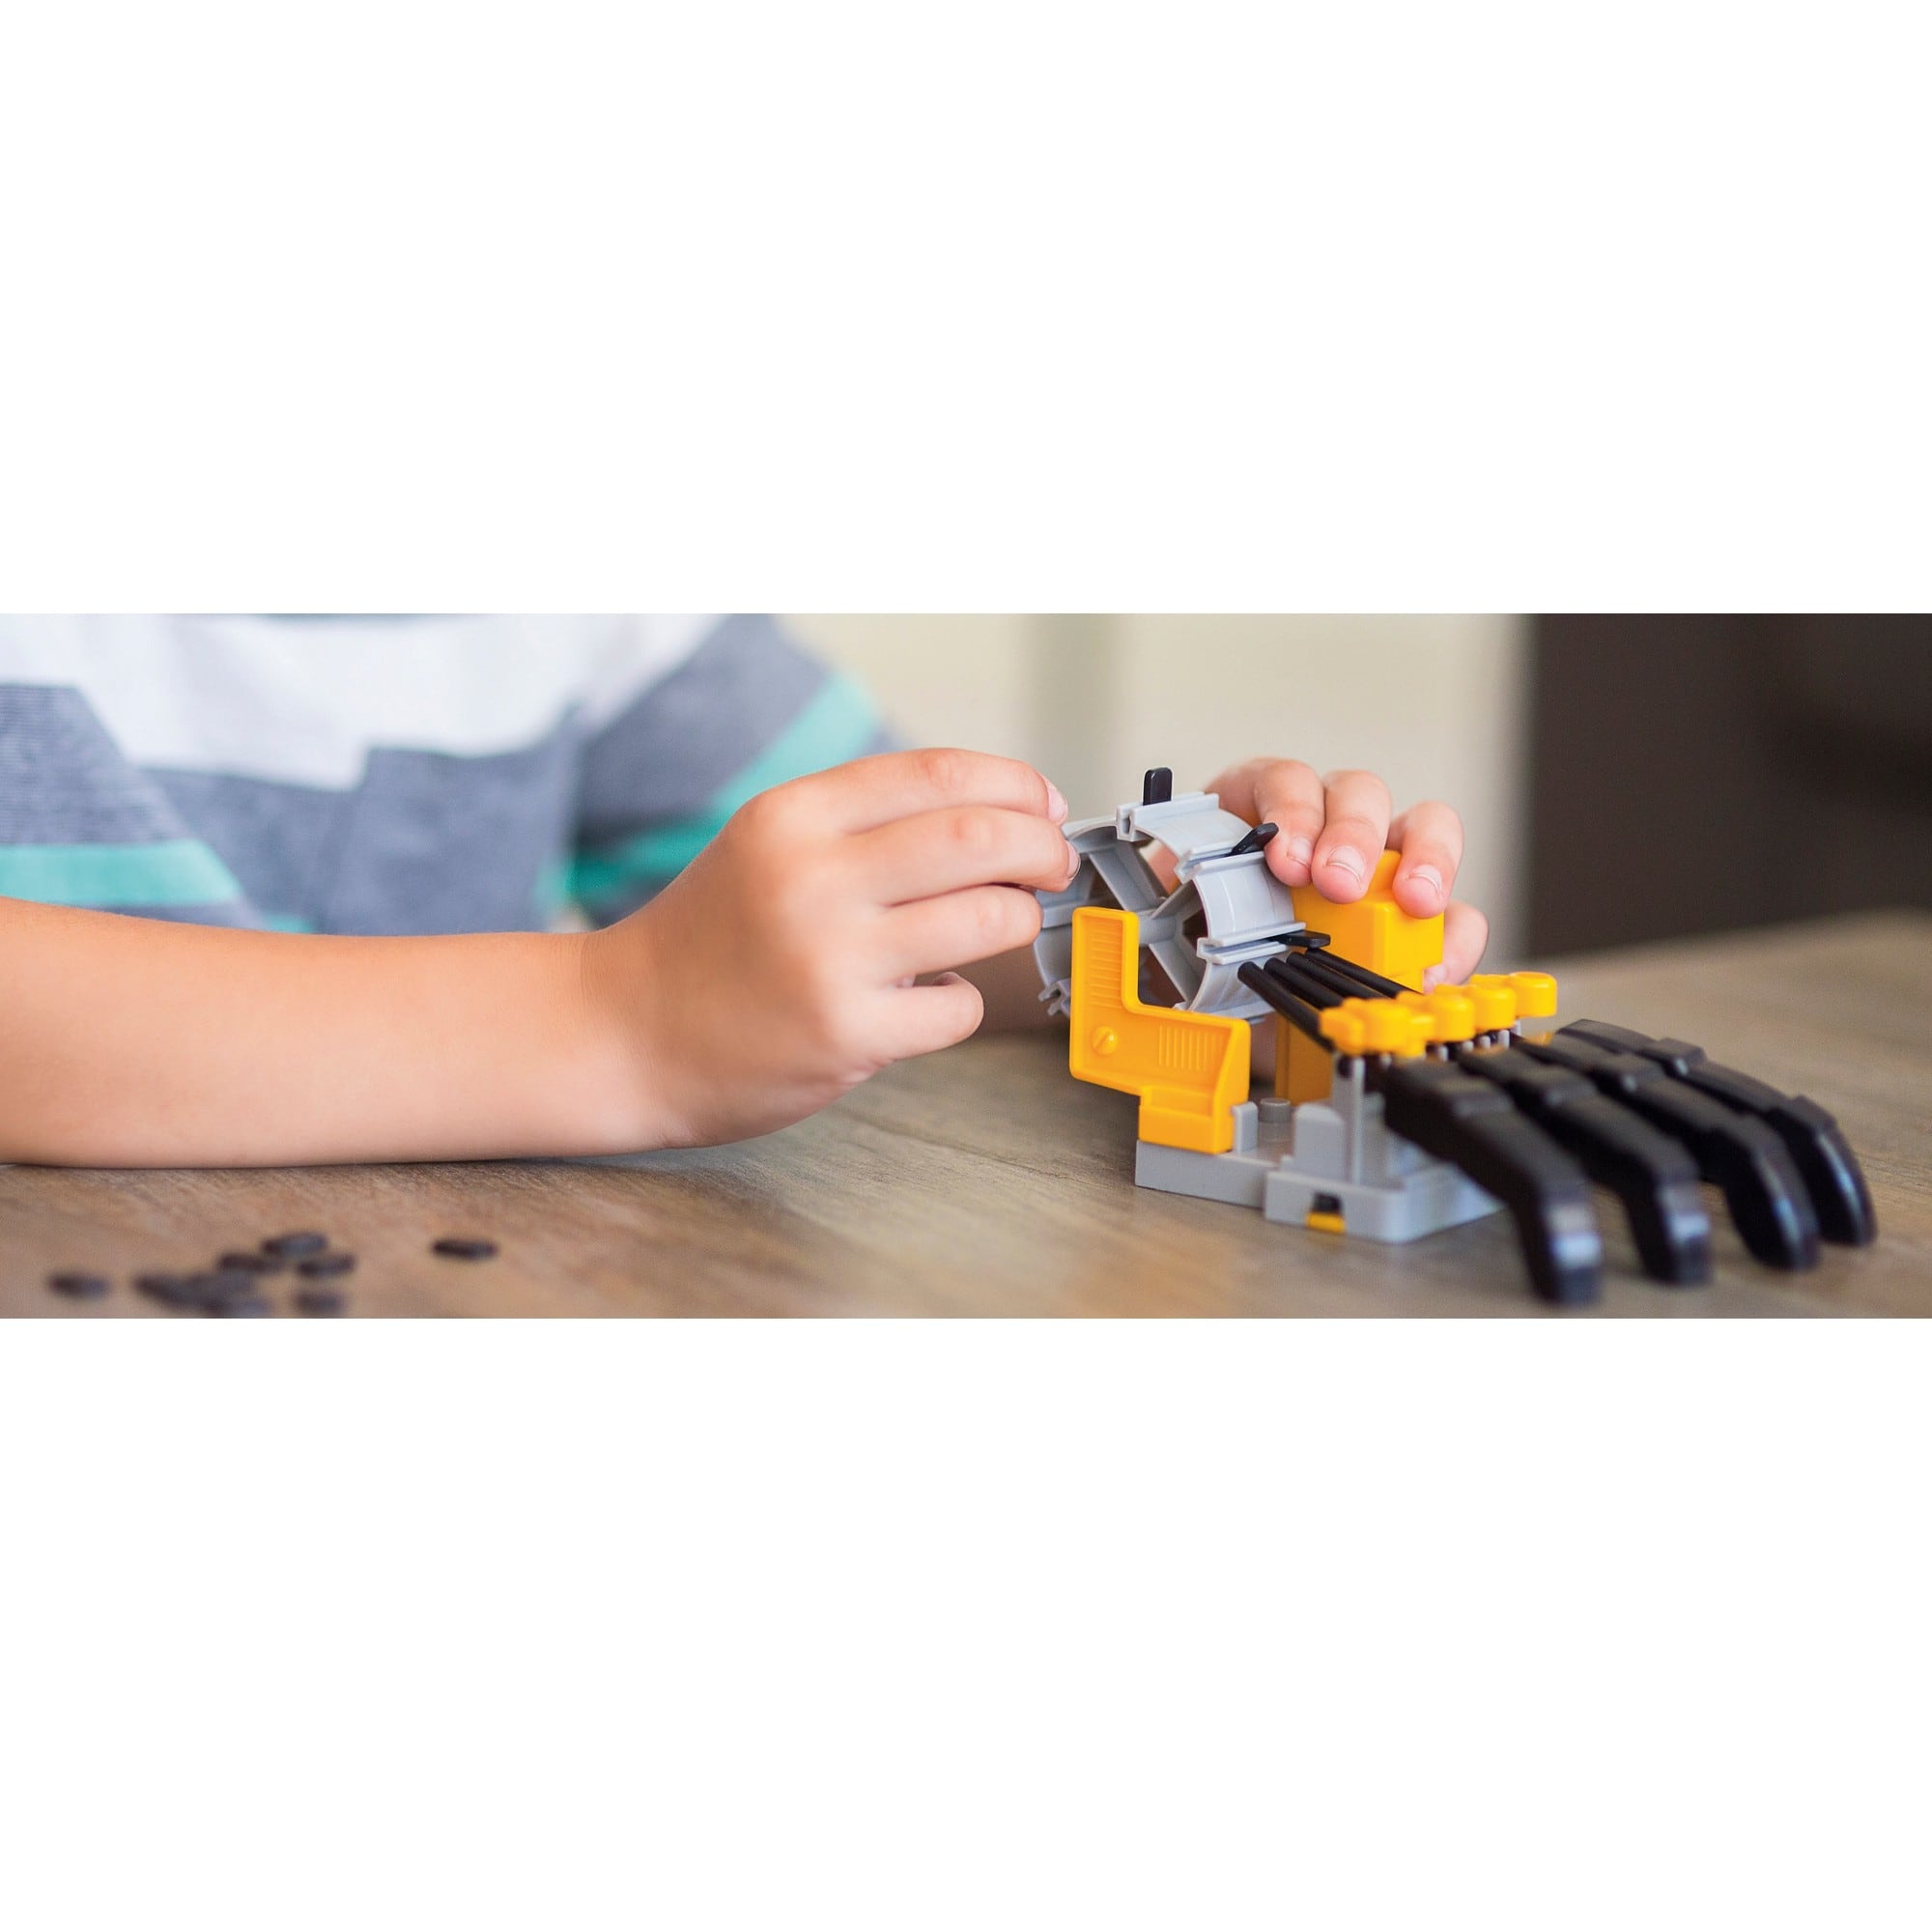 Toysmith&#xAE; 4M&#xAE; Kidzrobotix Motorized Robot Hand Kids Science Kit